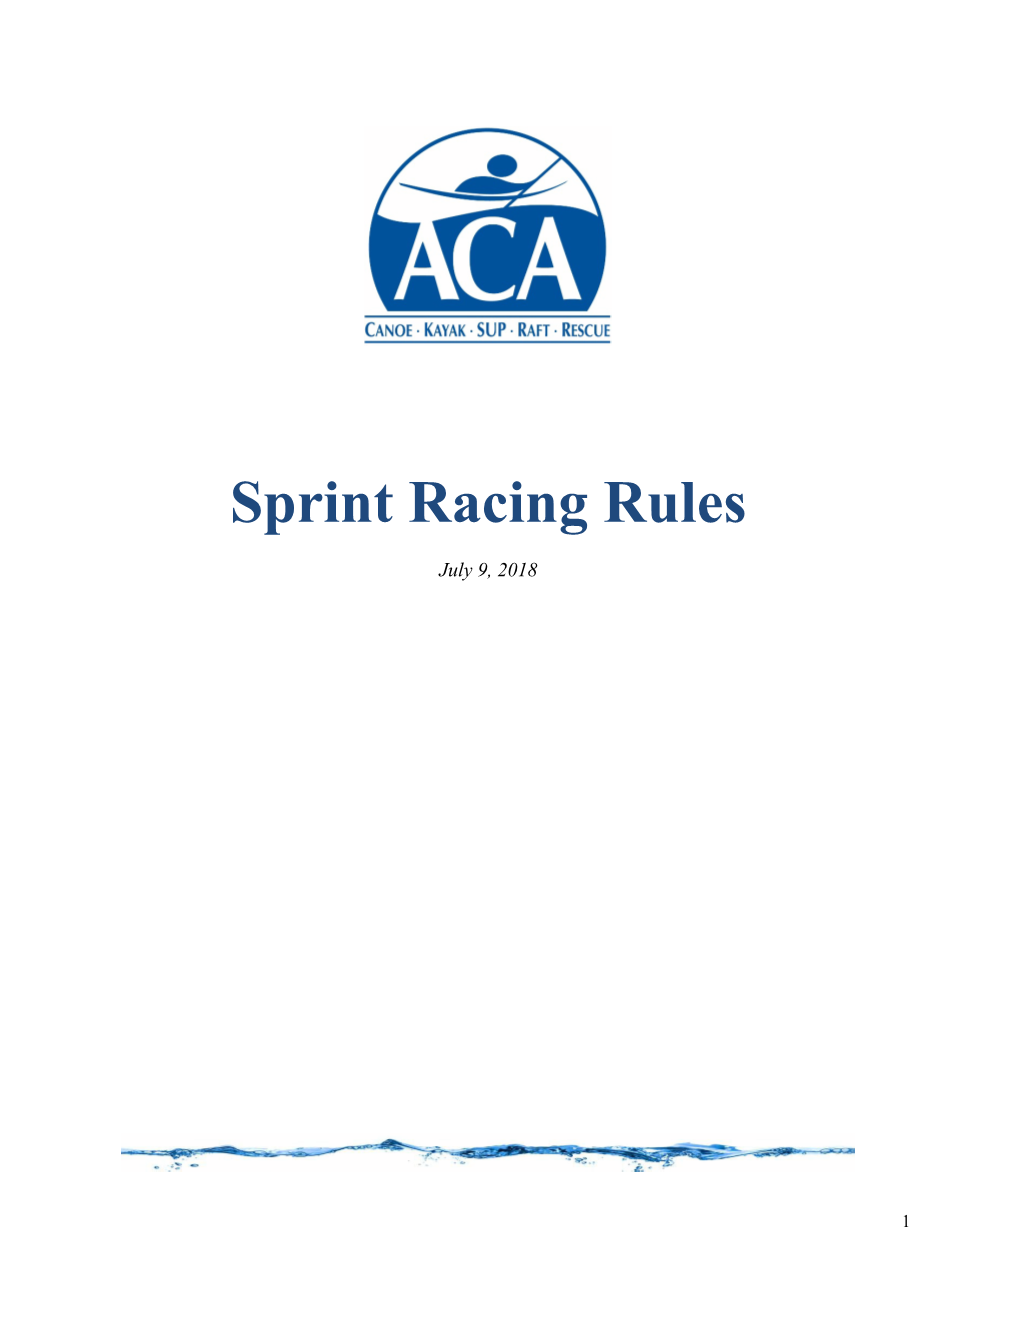 ACA Sprint Racing Rules FINAL 9 July 2018